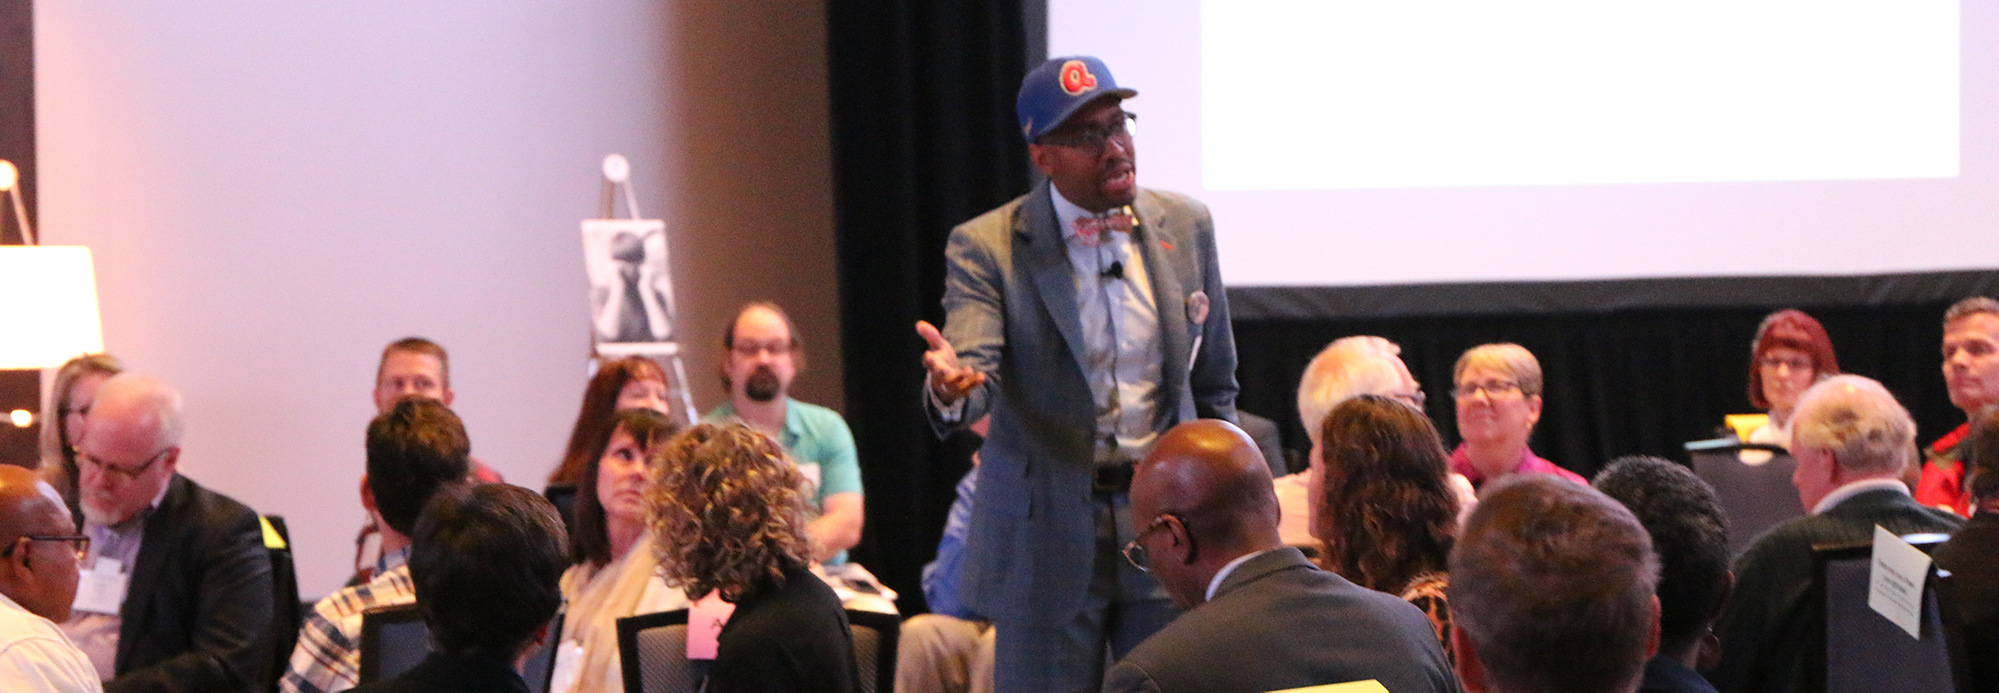 Fearless Dialogues의 설립자인 Gregory C. Ellison II 목사는 시카고에서 열린 Mid Council Leaders Gathering에서 연설한다. Rick Jones의 사진